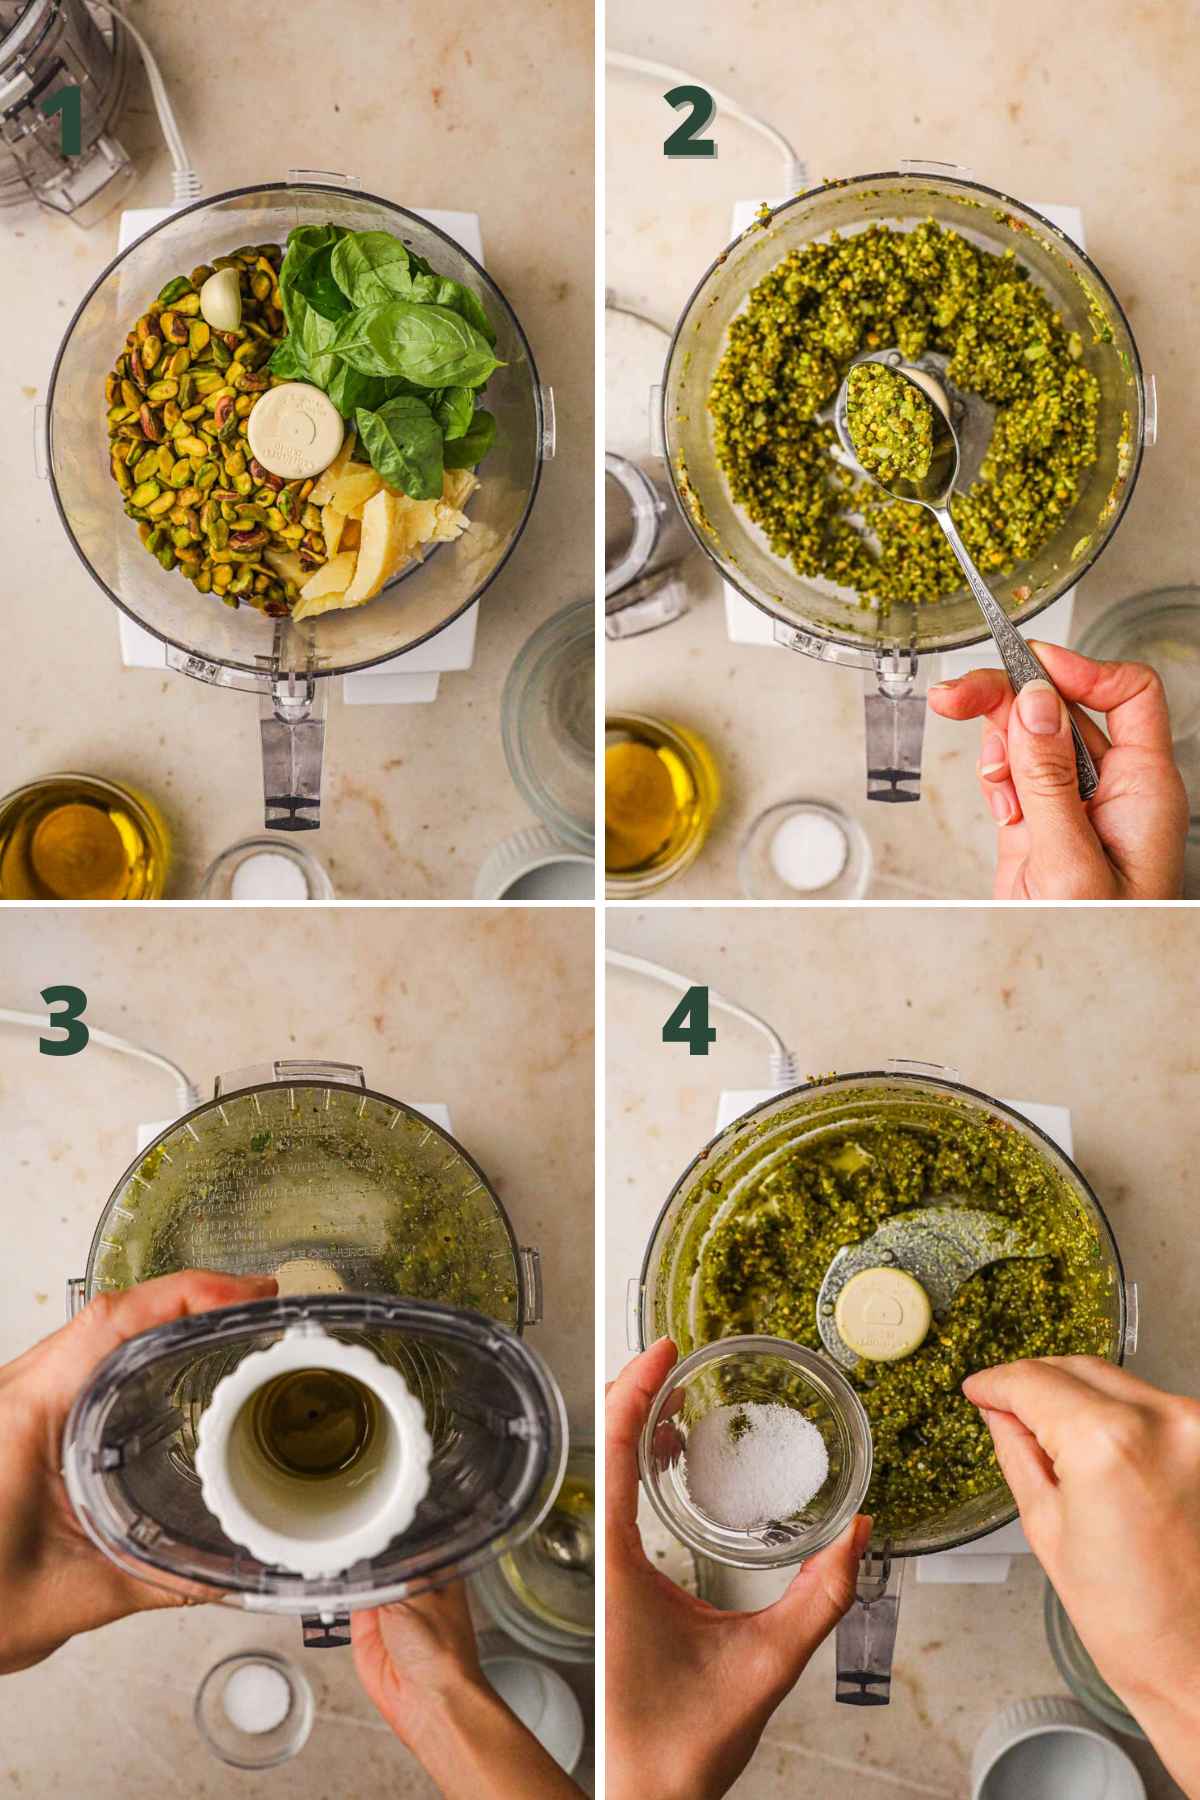 Steps to make pistachio pesto; add pistachios, parmigiano-reggiano, garlic, basil food processor; blend until grainy, stream in olive oil; salt to taste.